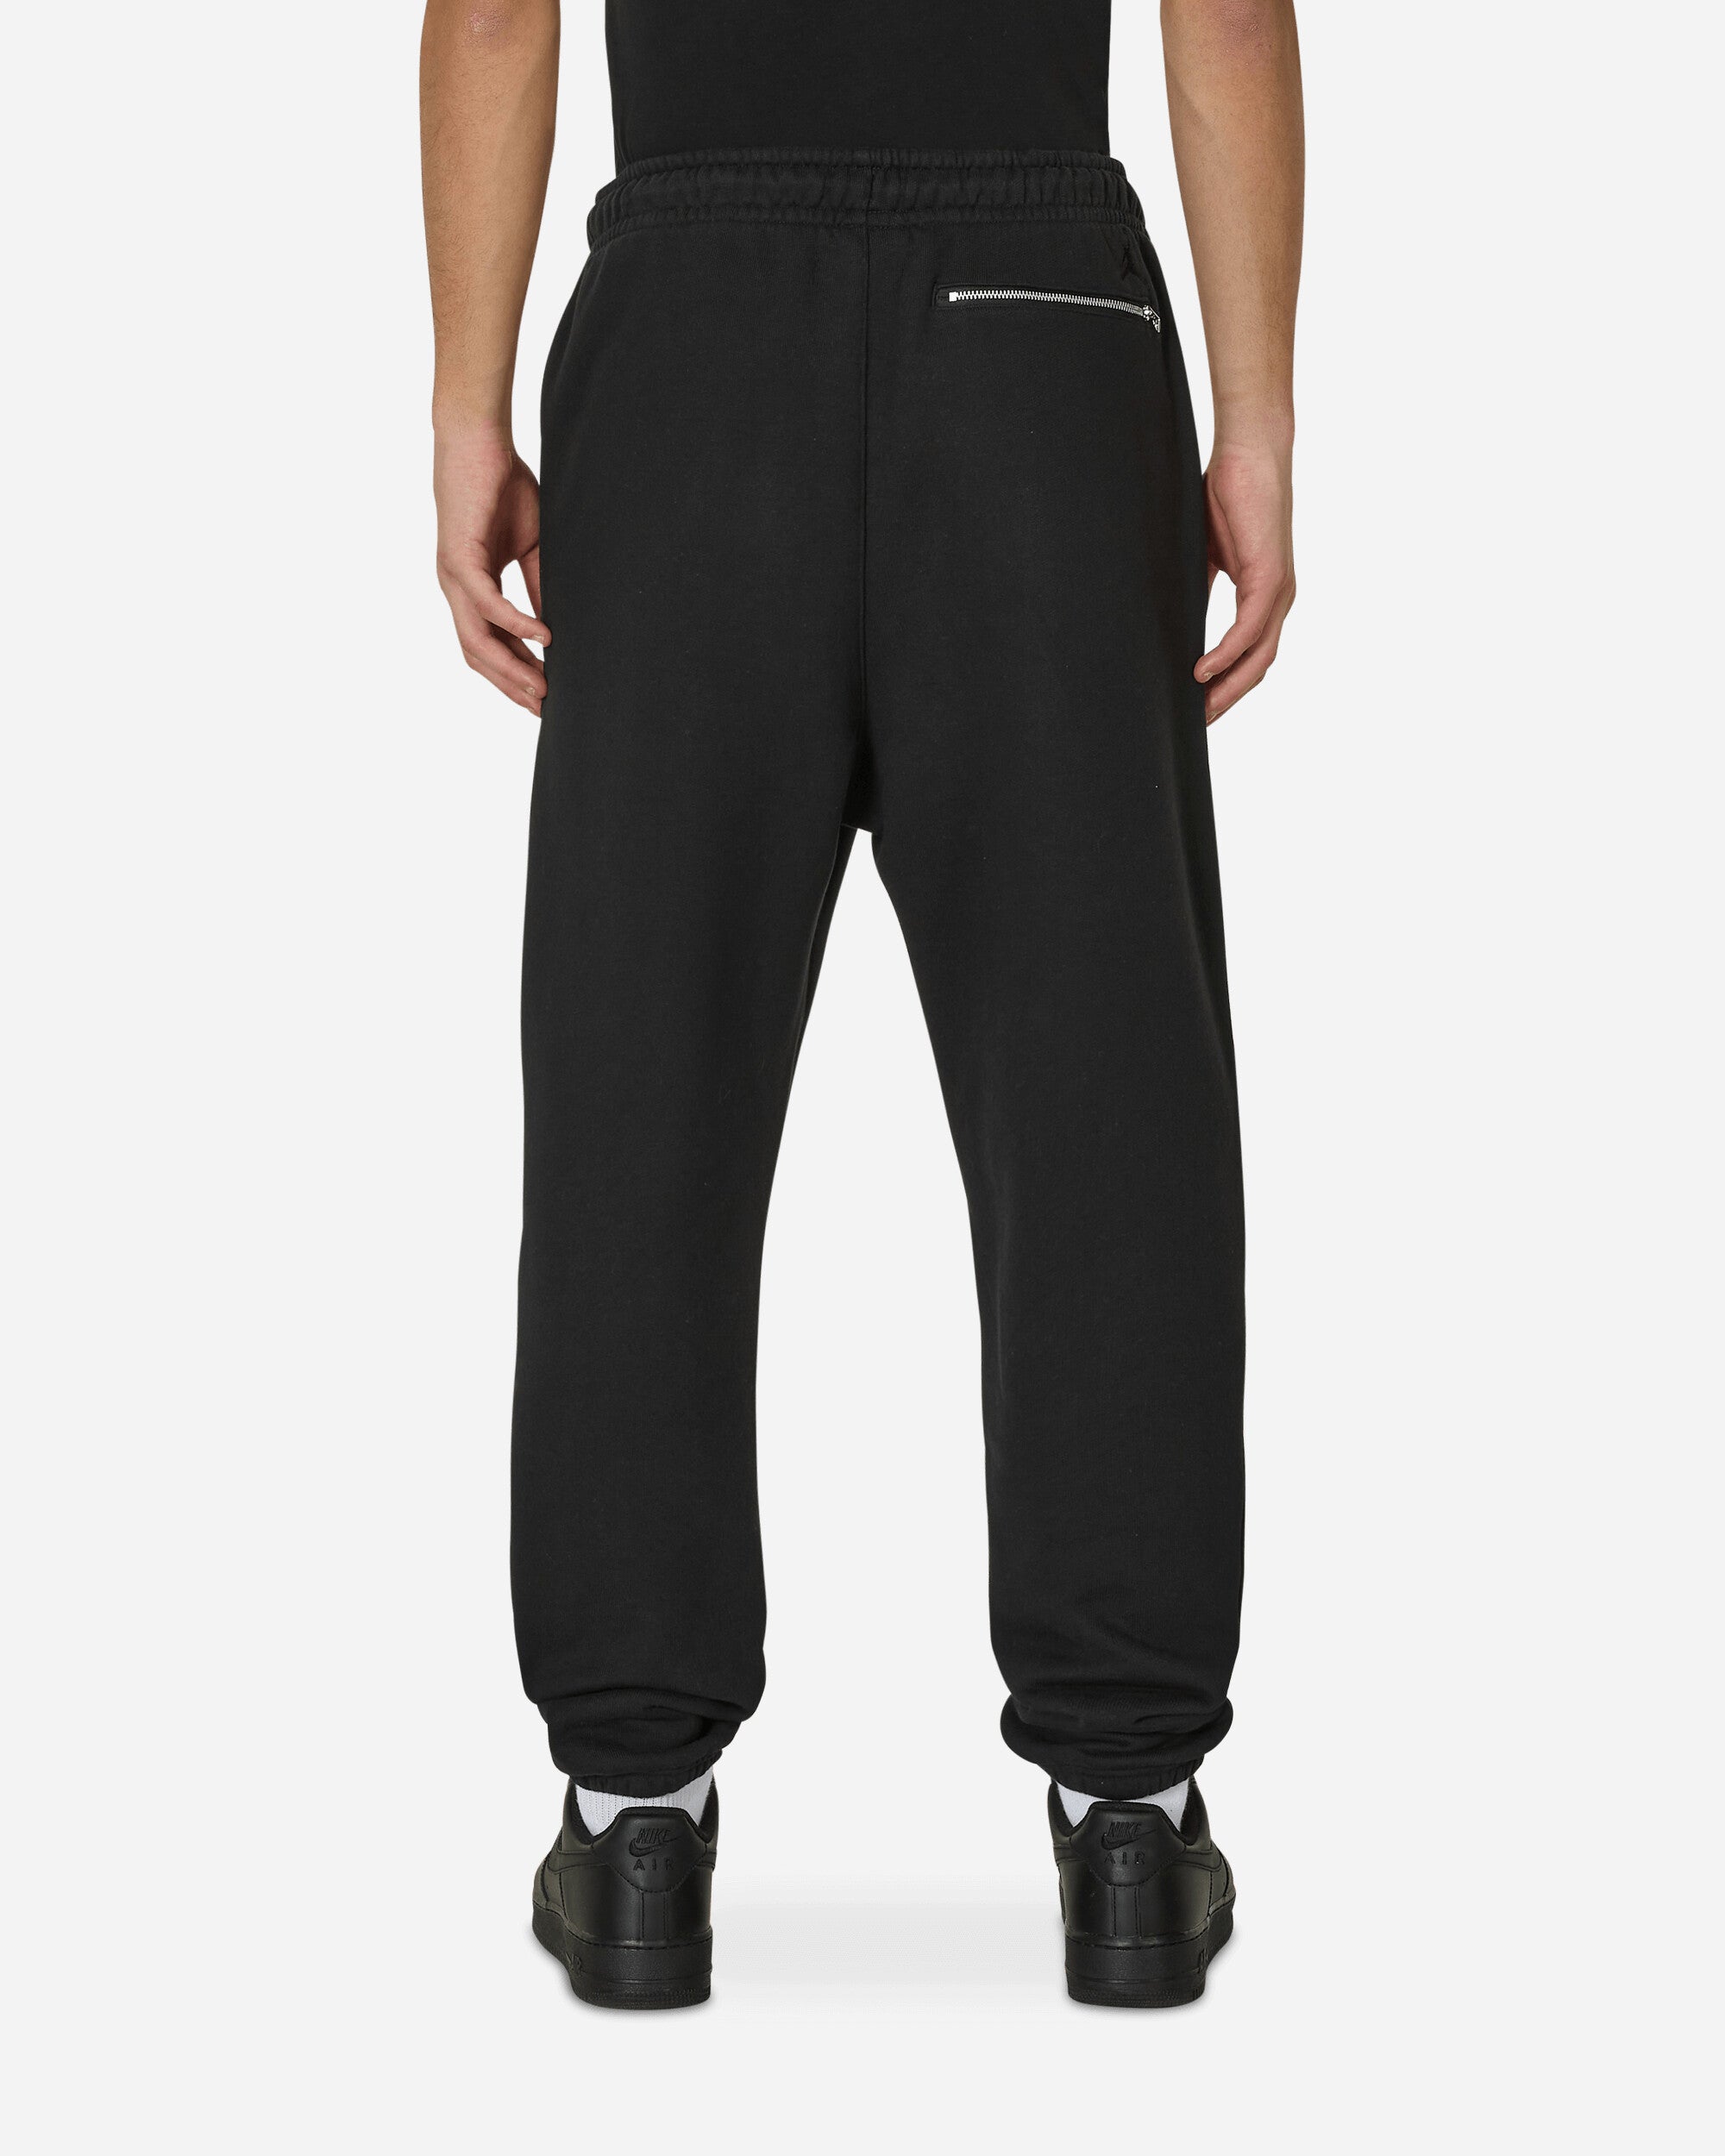 Nike Jordan Air Jordan Wm Flc Pant Black Pants Sweatpants FJ0696-010